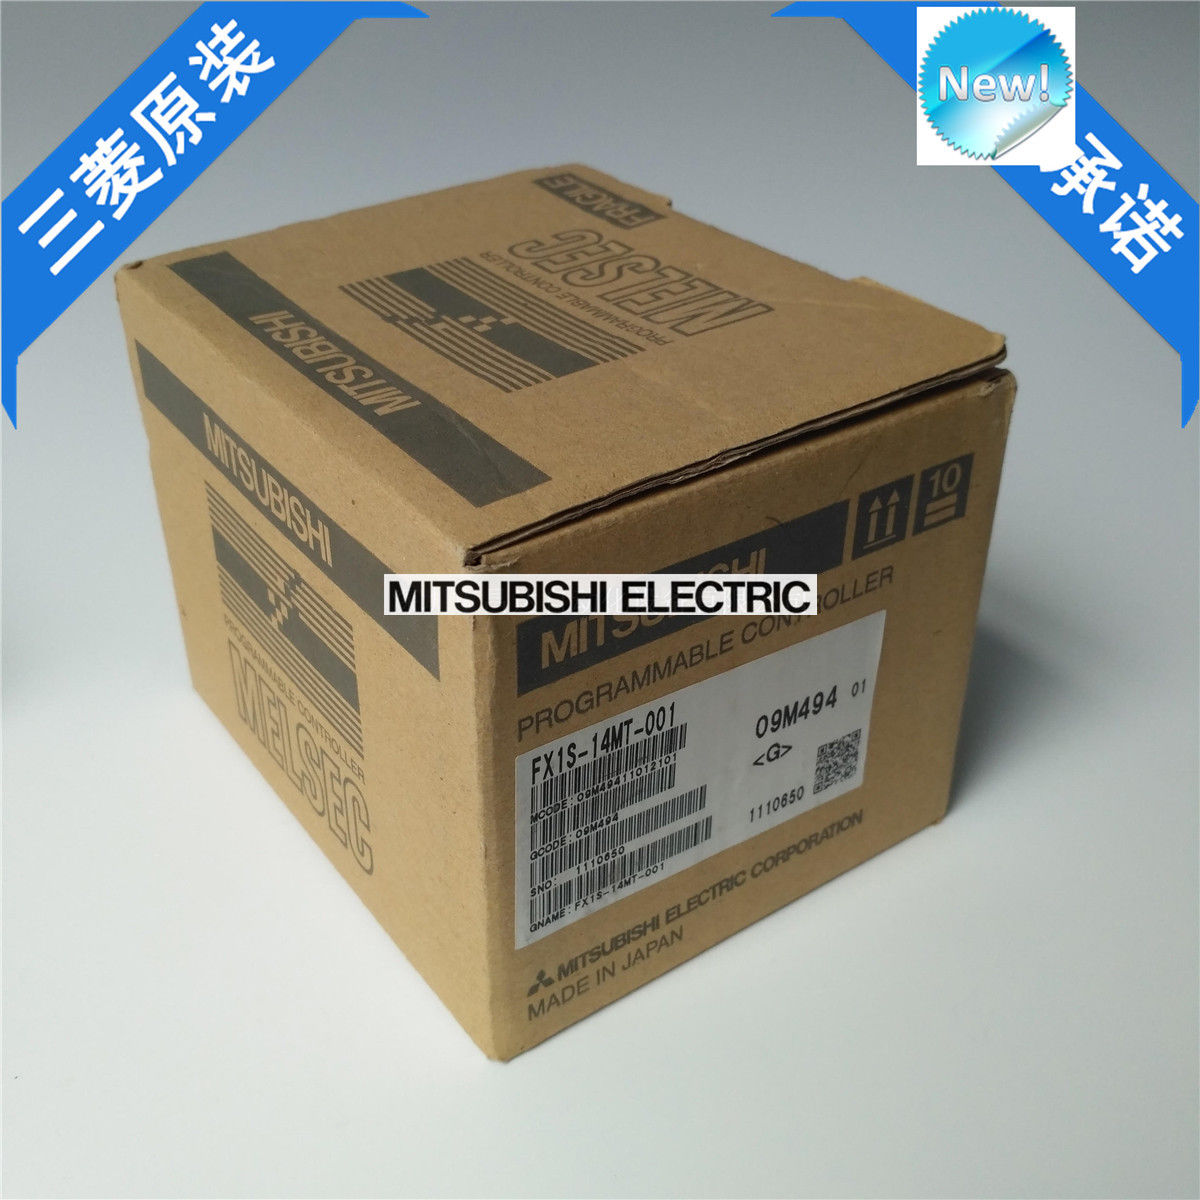 New Mitsubishi PLC FX1S-14MT-001 Programmable logic controller In Box